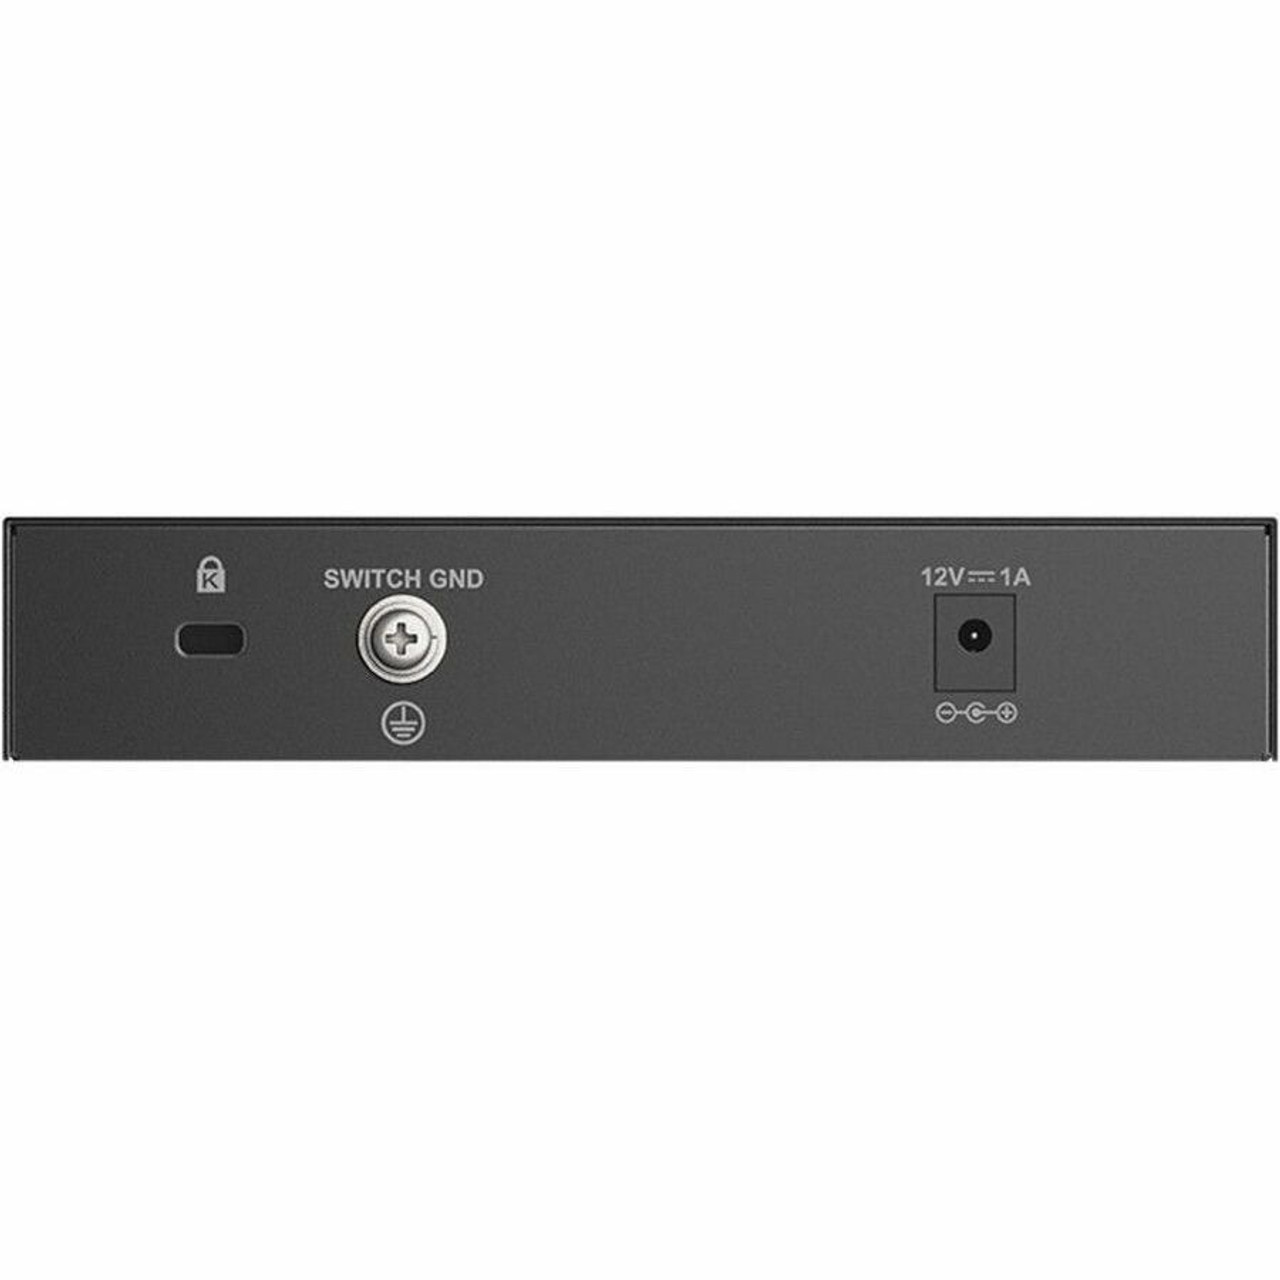 D-Link 7-Port Multi-Gigabit (2.5Gb) Unmanaged Ethernet Switch - 2 x 2. –  D-Link Systems, Inc